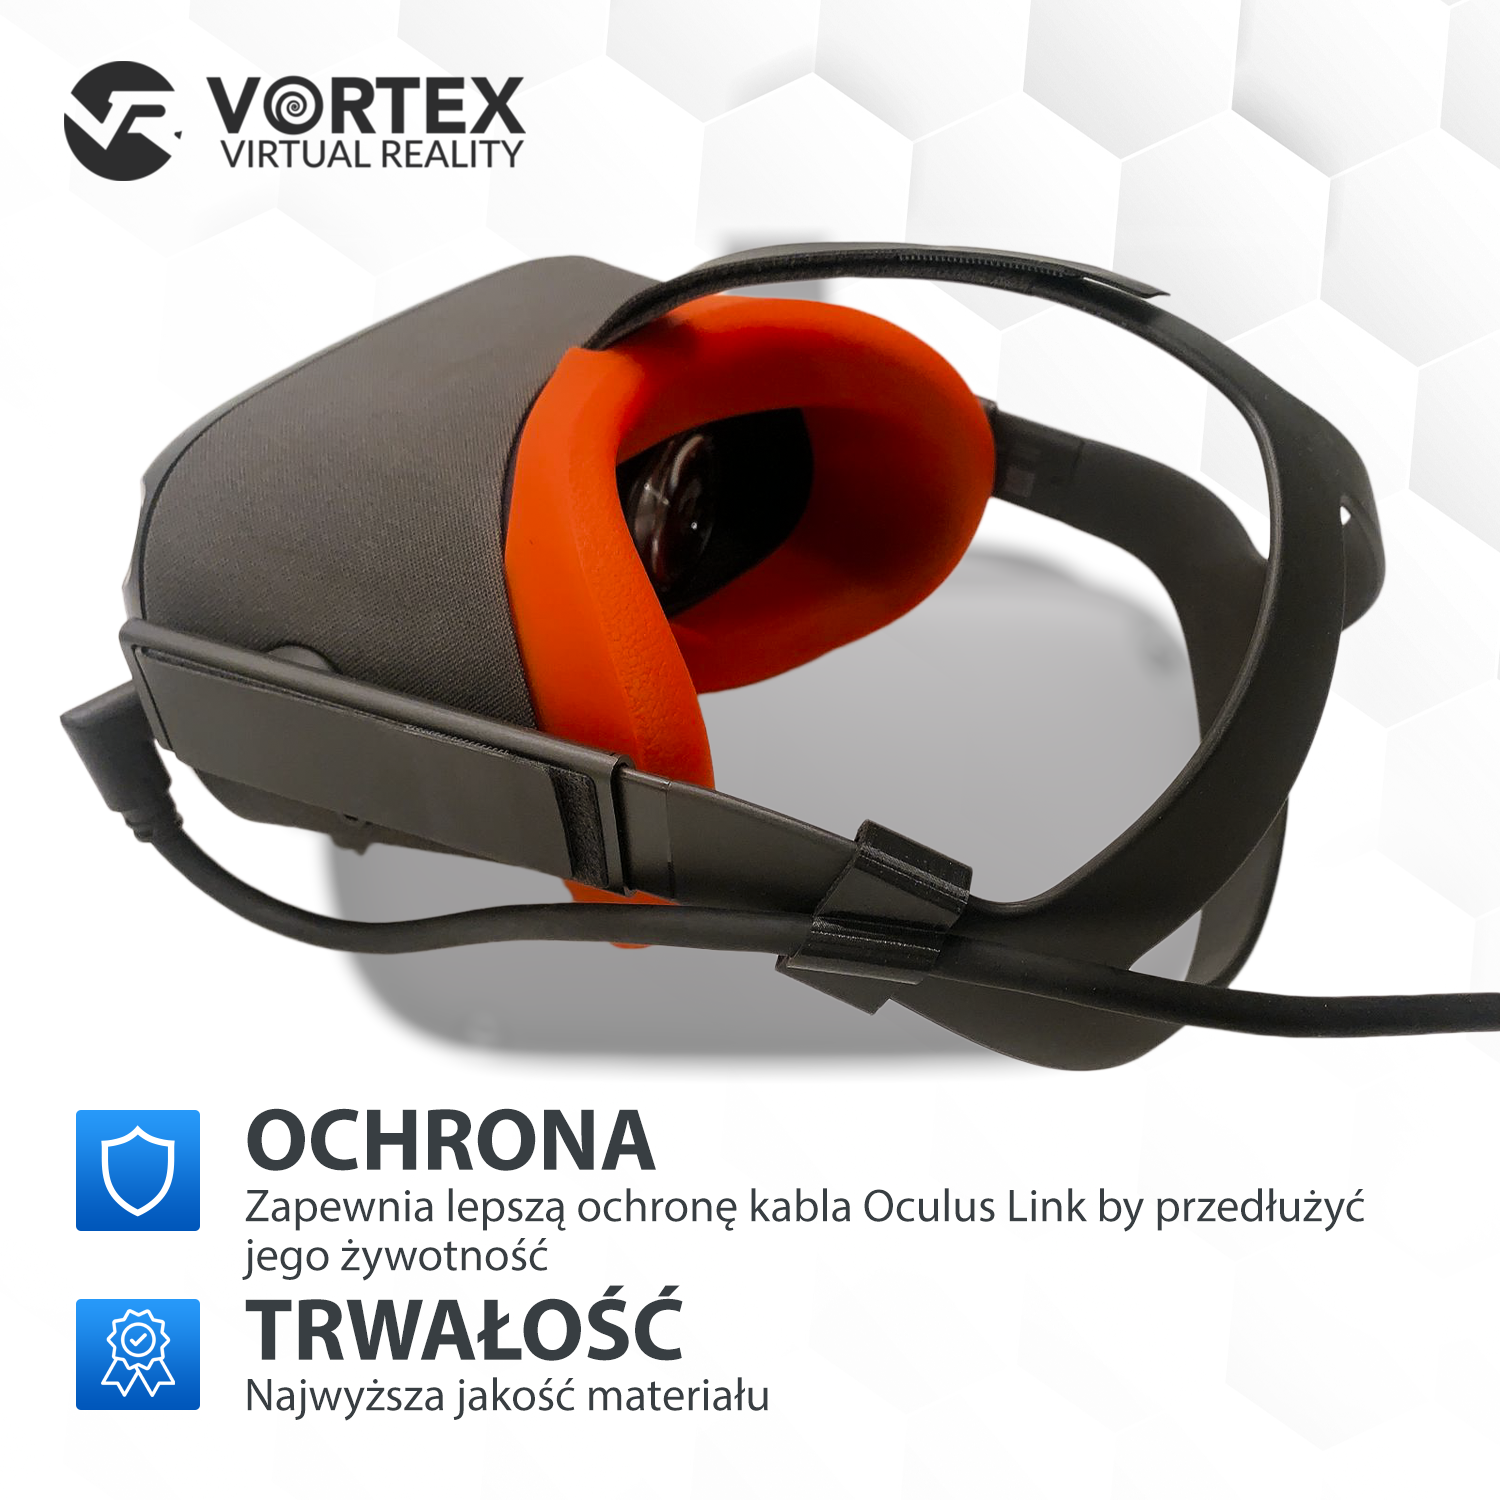 Element mocujący kabel Oculus Link do okularów Oculus Quest 1